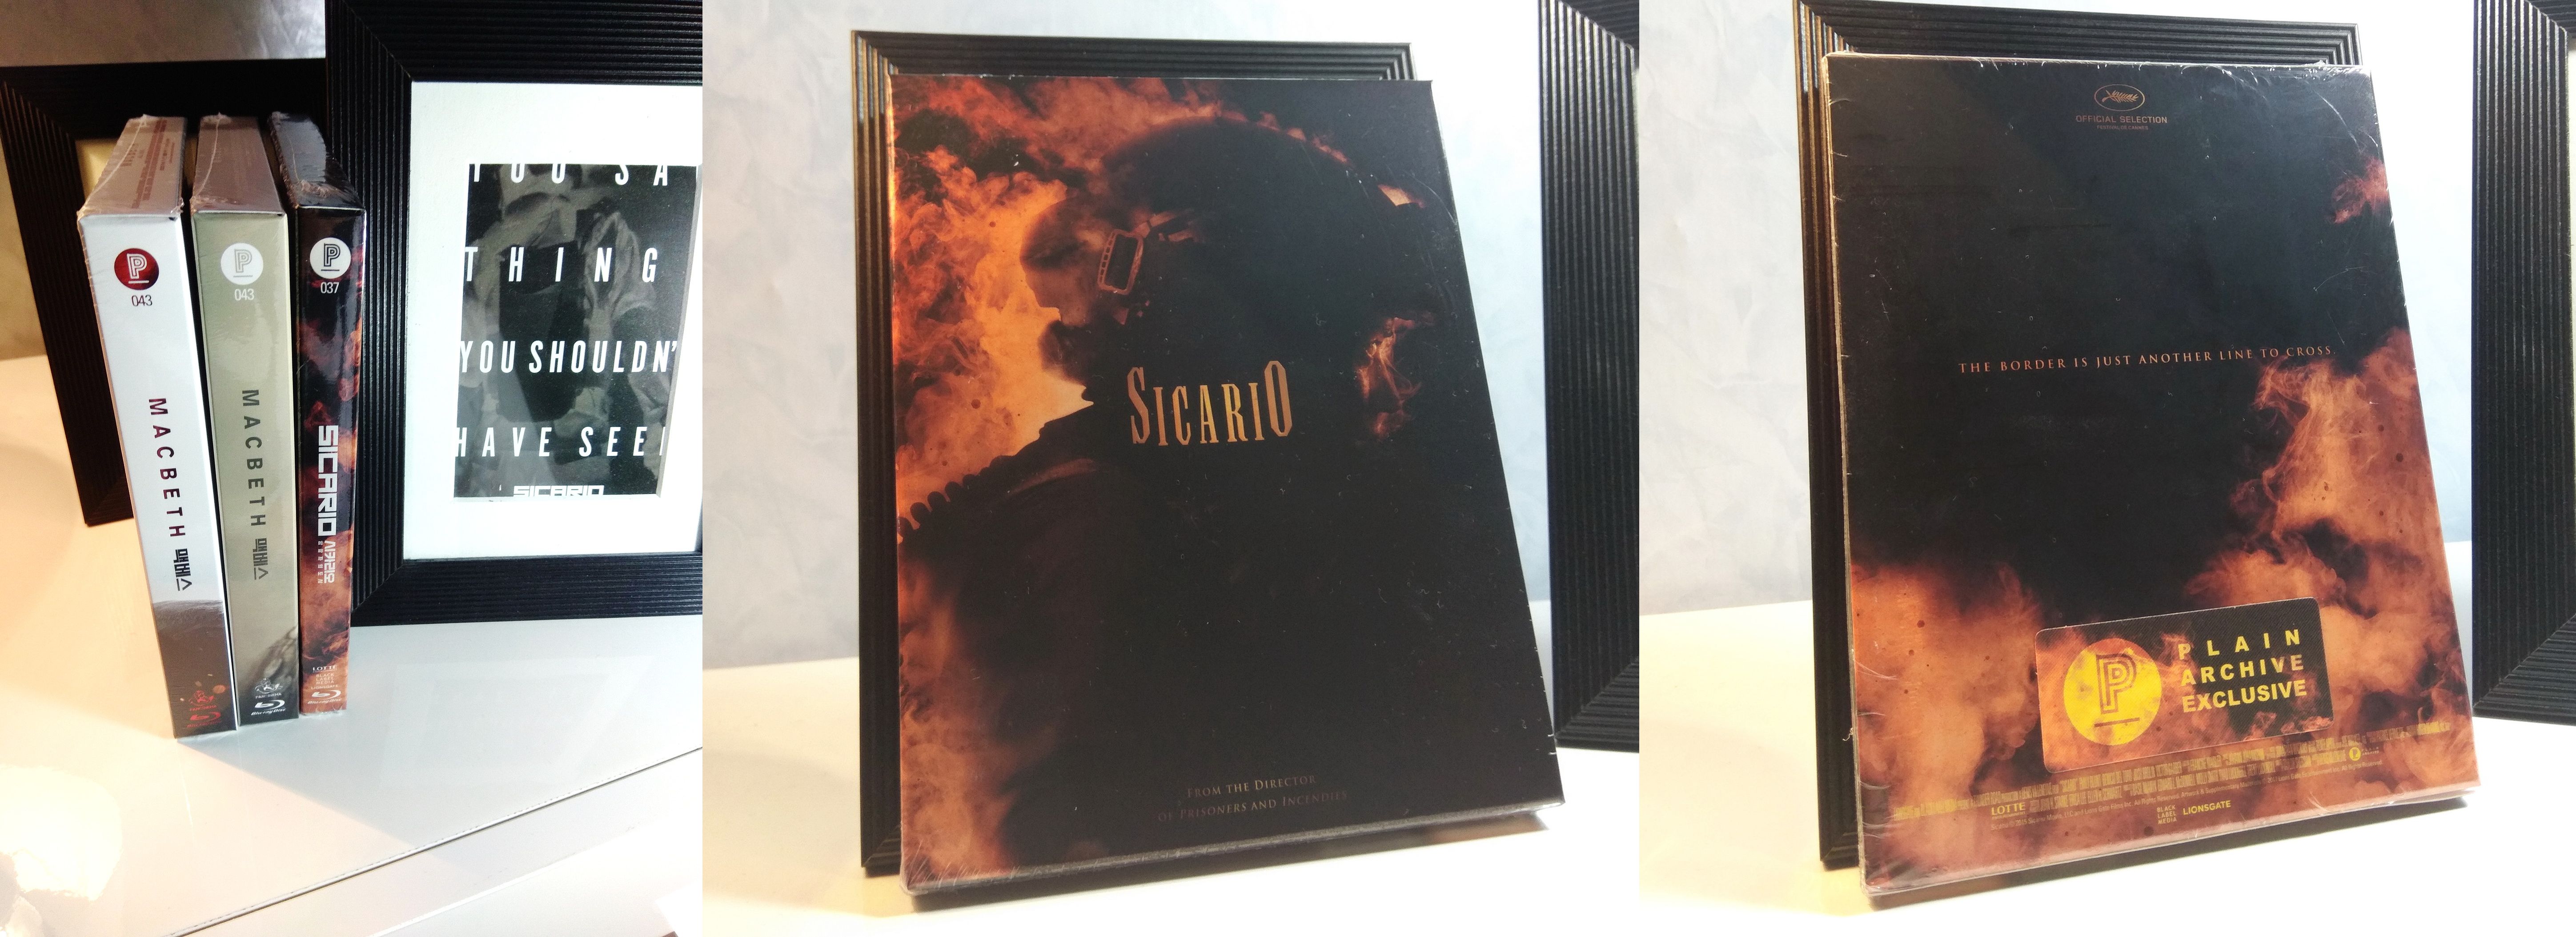 Sicario Plain Archive Korea Slipcover Bluray